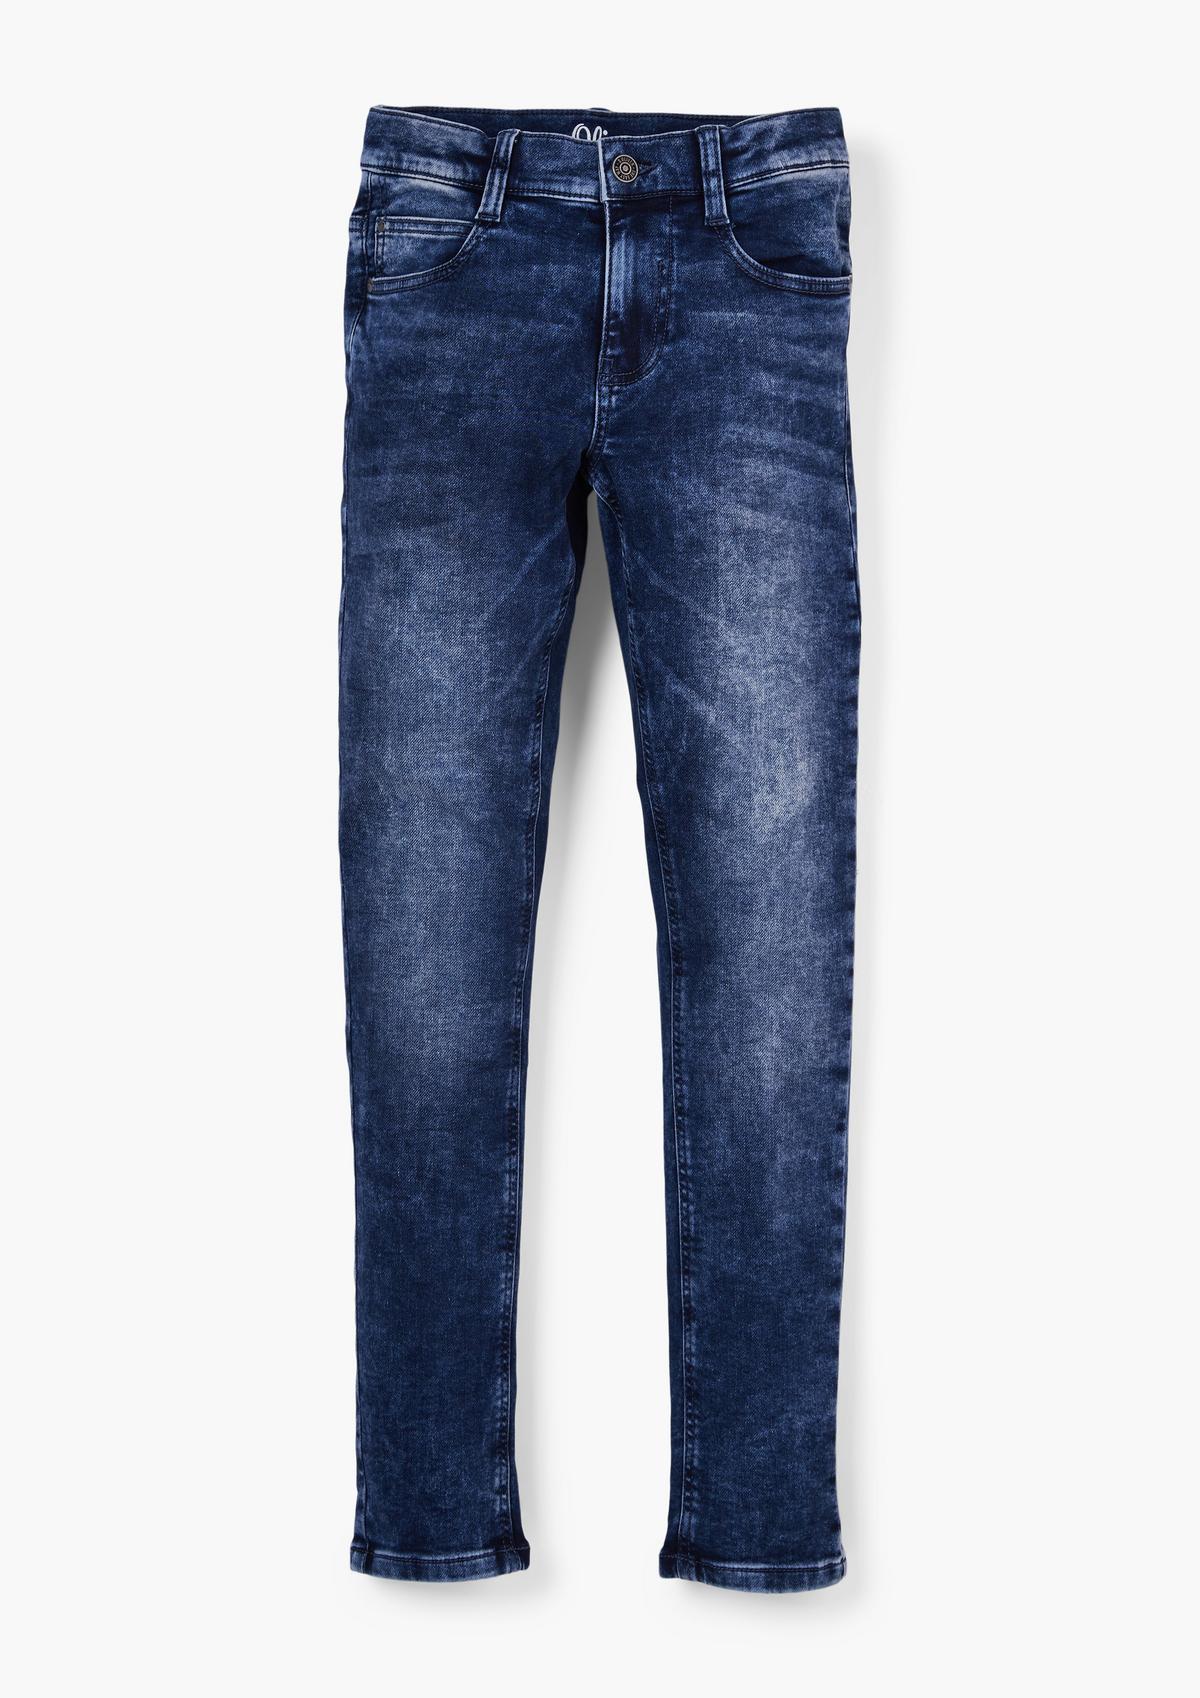 s.Oliver Jeans Skinny Seattle / Slim Fit / Mid Rise / Skinny Leg